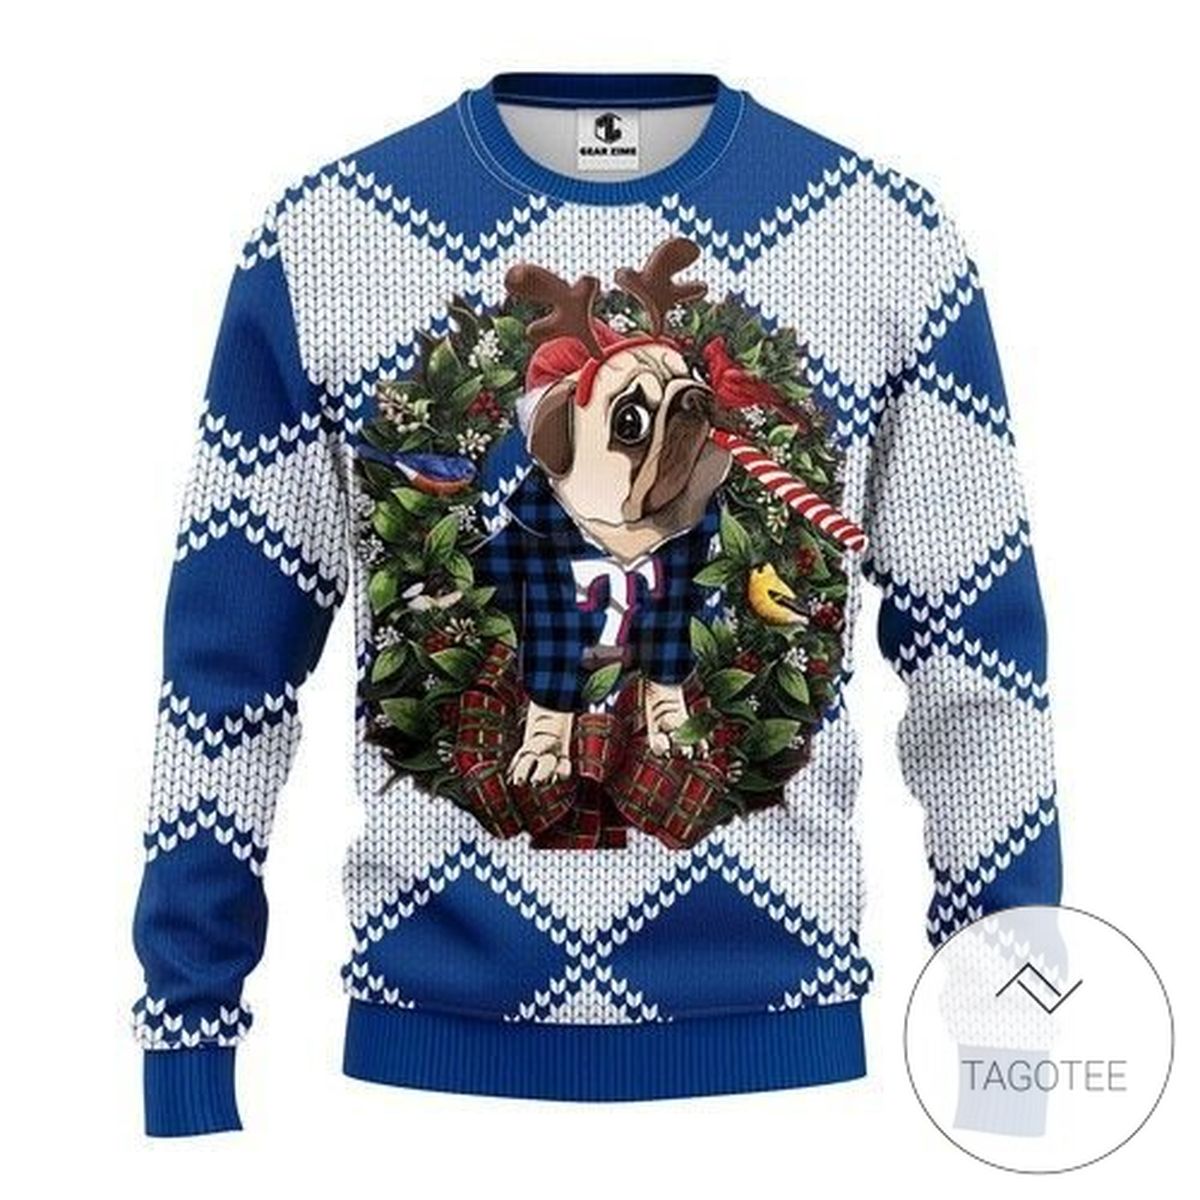 Mlb Texas Rangers Pug Dog Sweatshirt Knitted Ugly Christmas Sweater